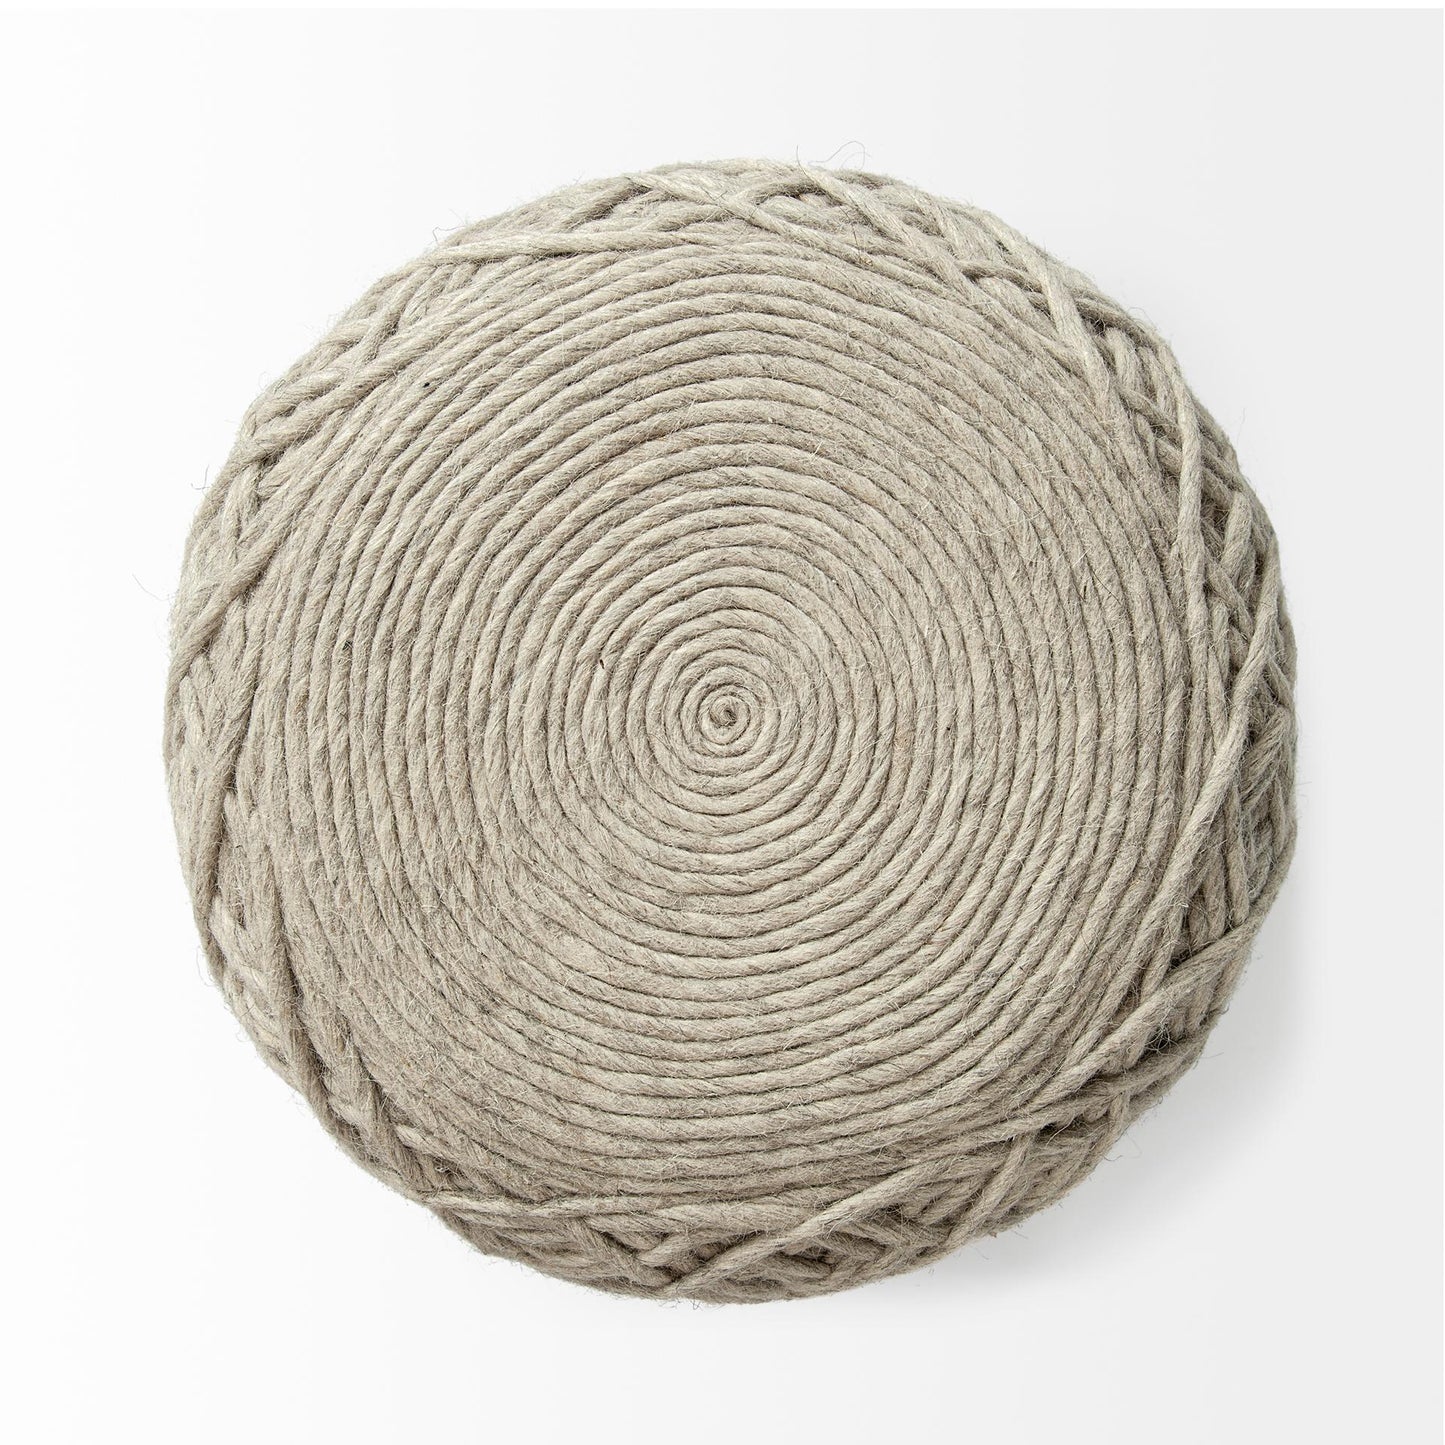 Allium Oatmeal Handwoven Wool Cylindrical Pouf